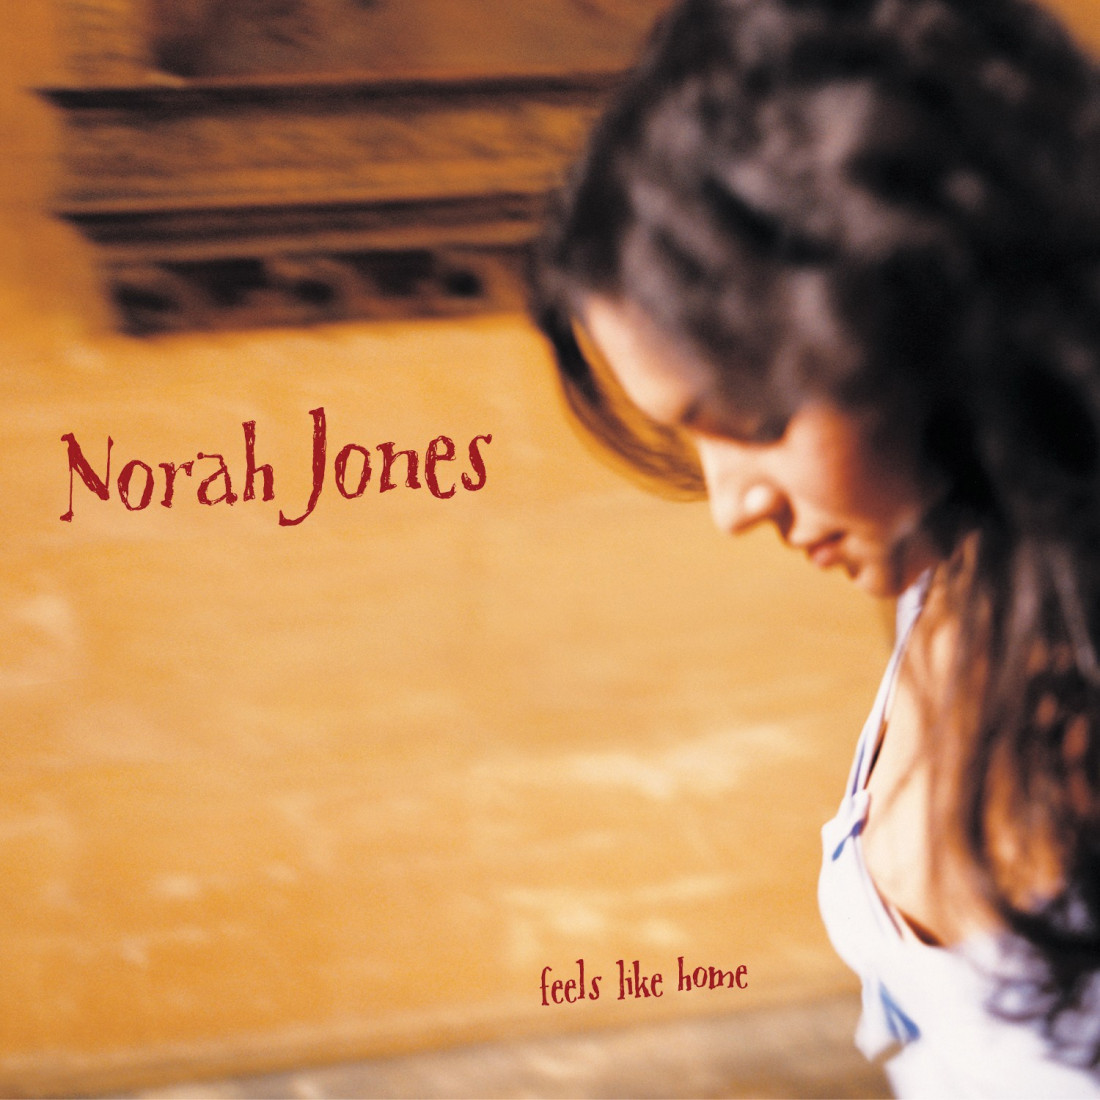 [Norah Jones] The Long Way Home (Feels like home) Photo-Image